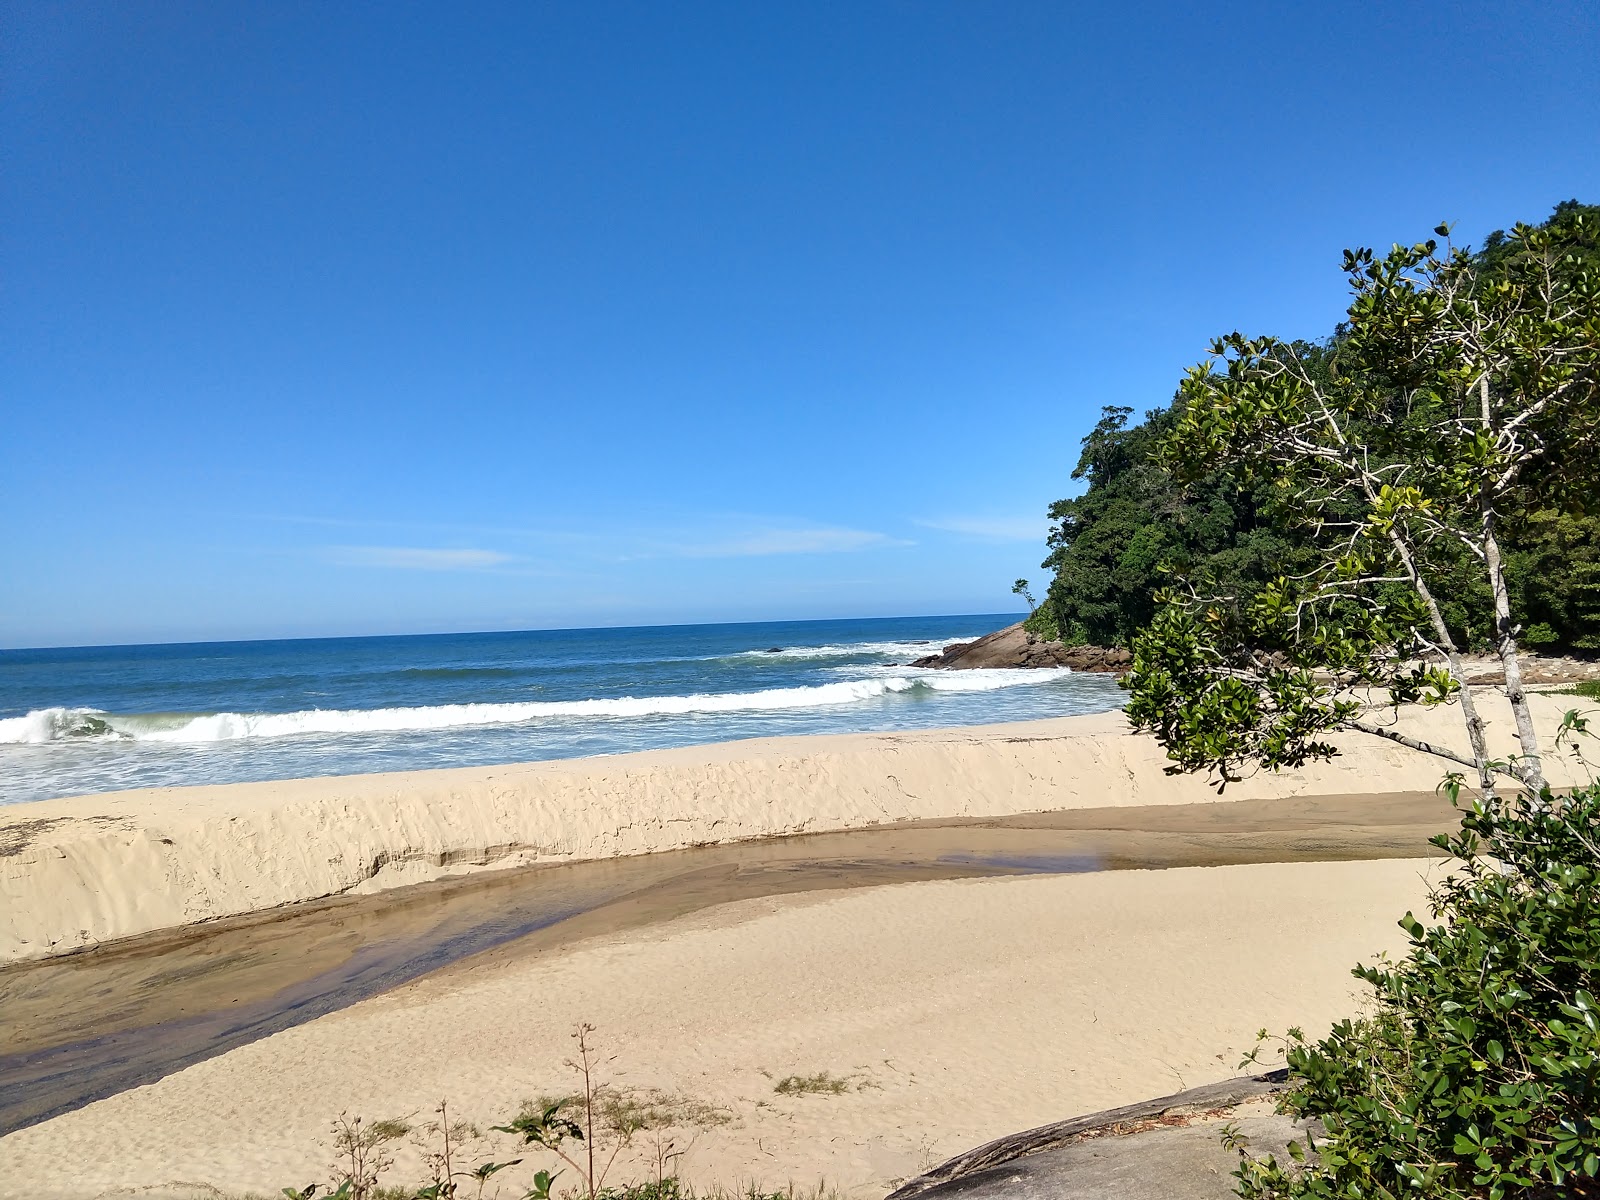 Photo de Praia da Meia Lua situé dans une zone naturelle